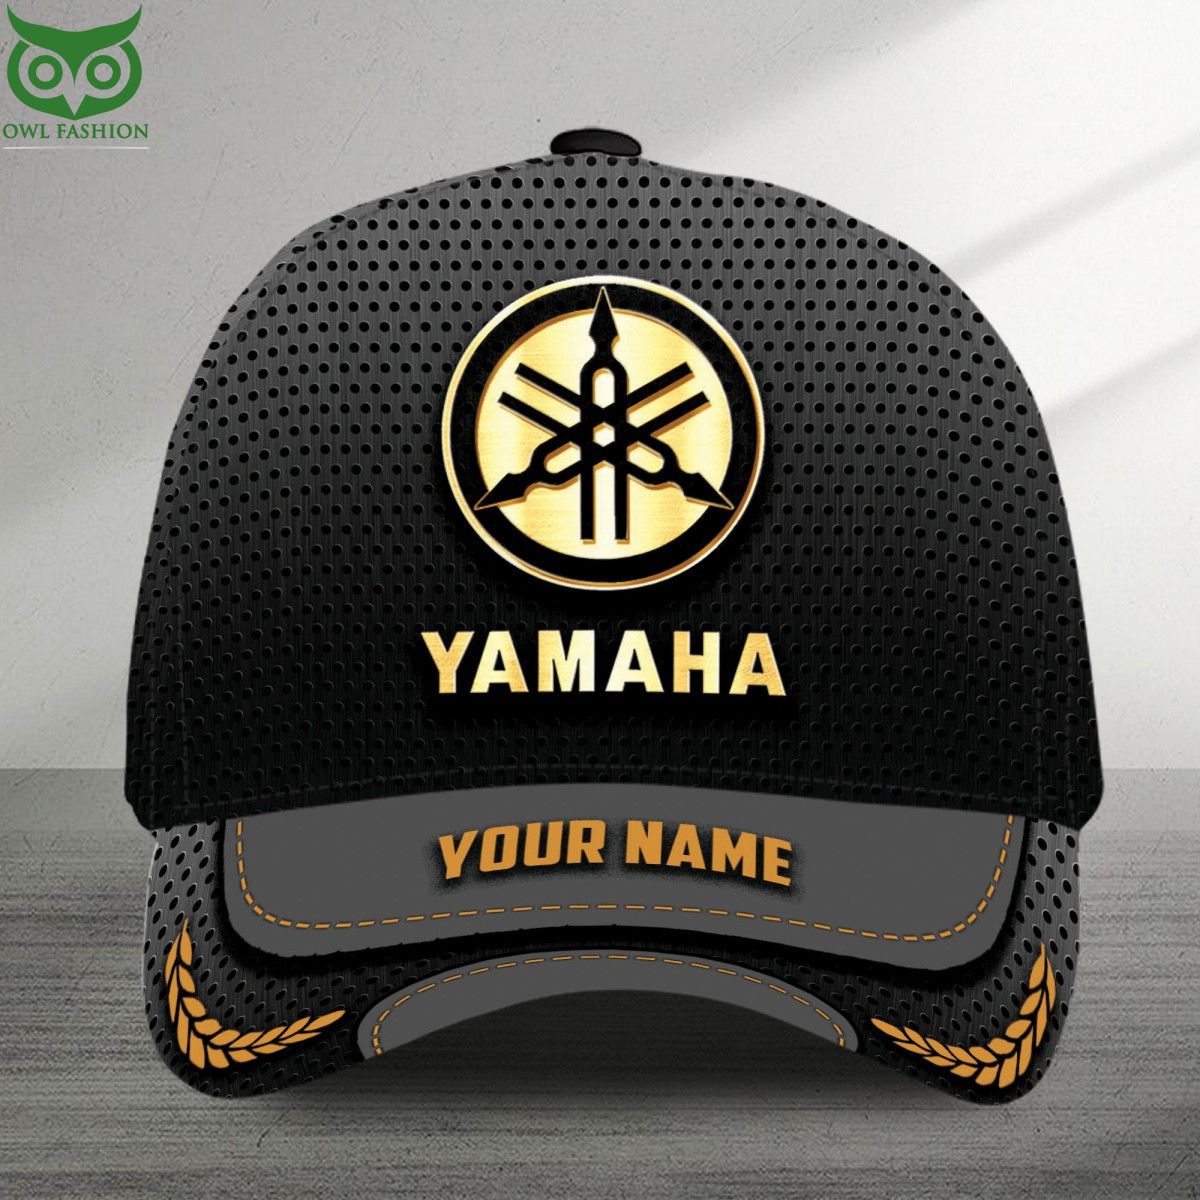 yamaha luxury car brand custom classic cap 2 gNQSH.jpg